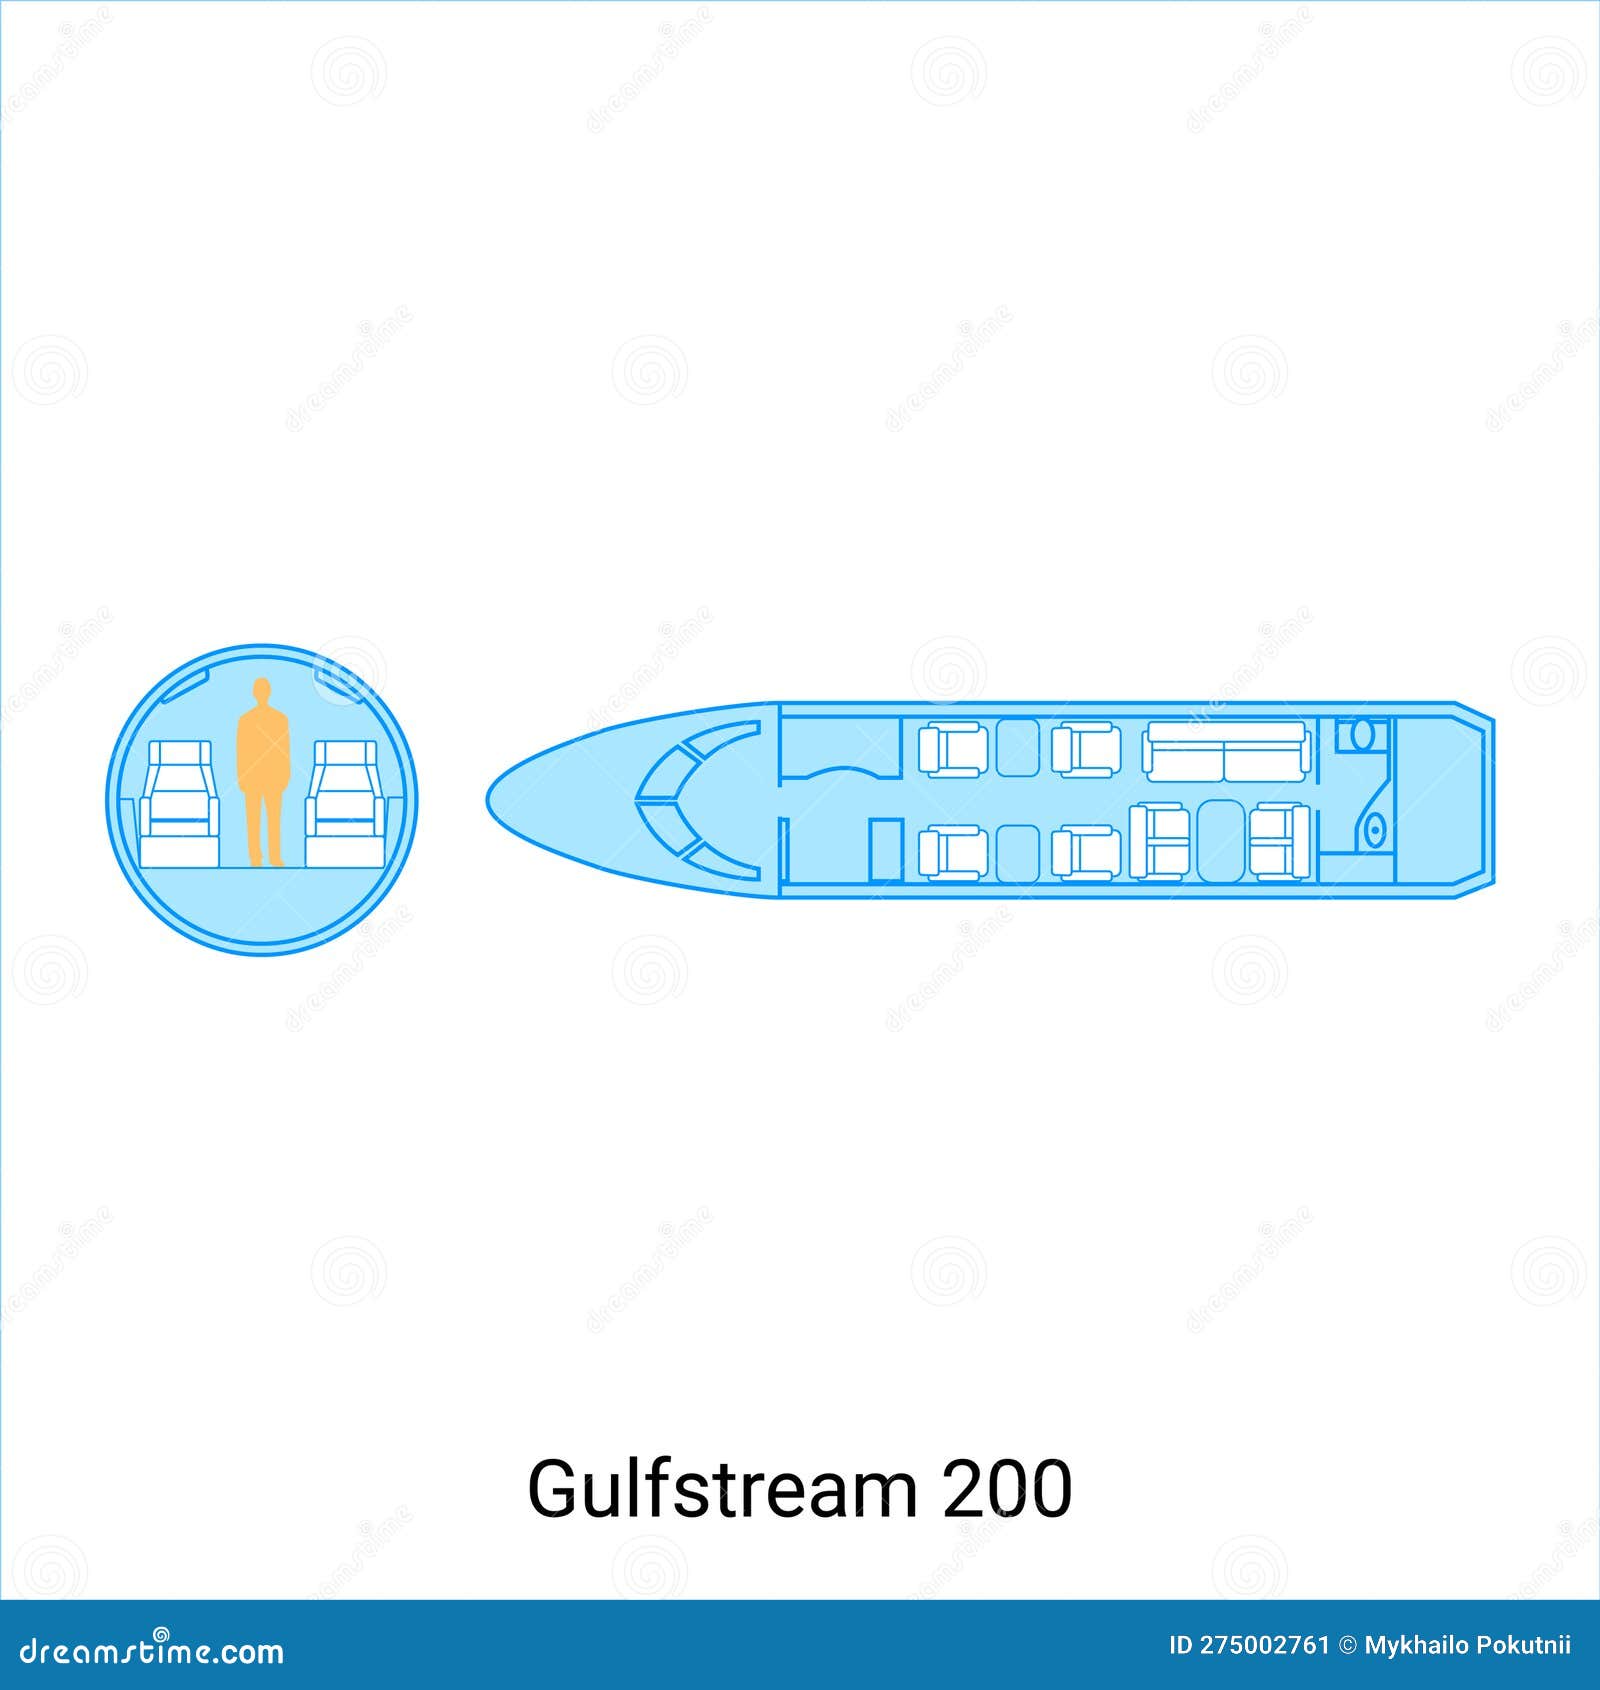 Gulfstream 200 Airplane Scheme. Civil Aircraft Guide Stock Vector ...